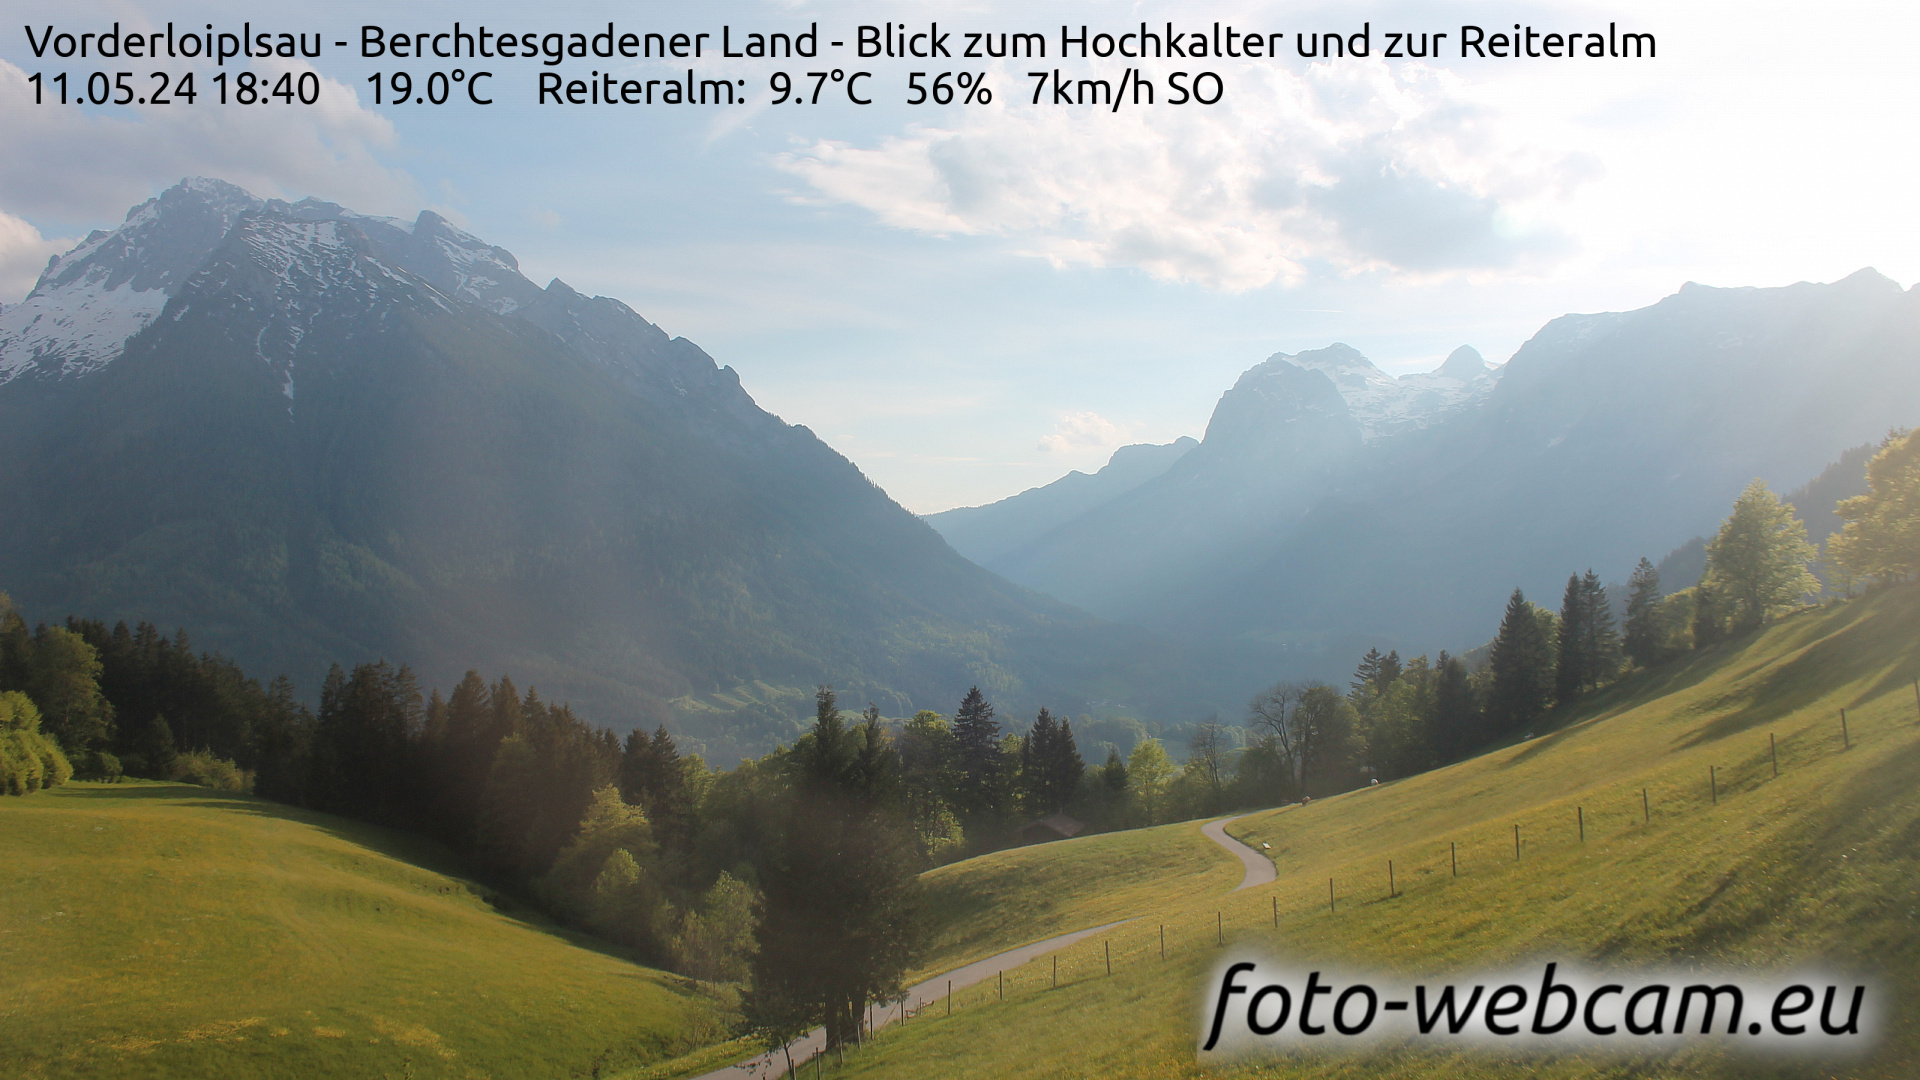 Ramsau bei Berchtesgaden Mi. 18:48